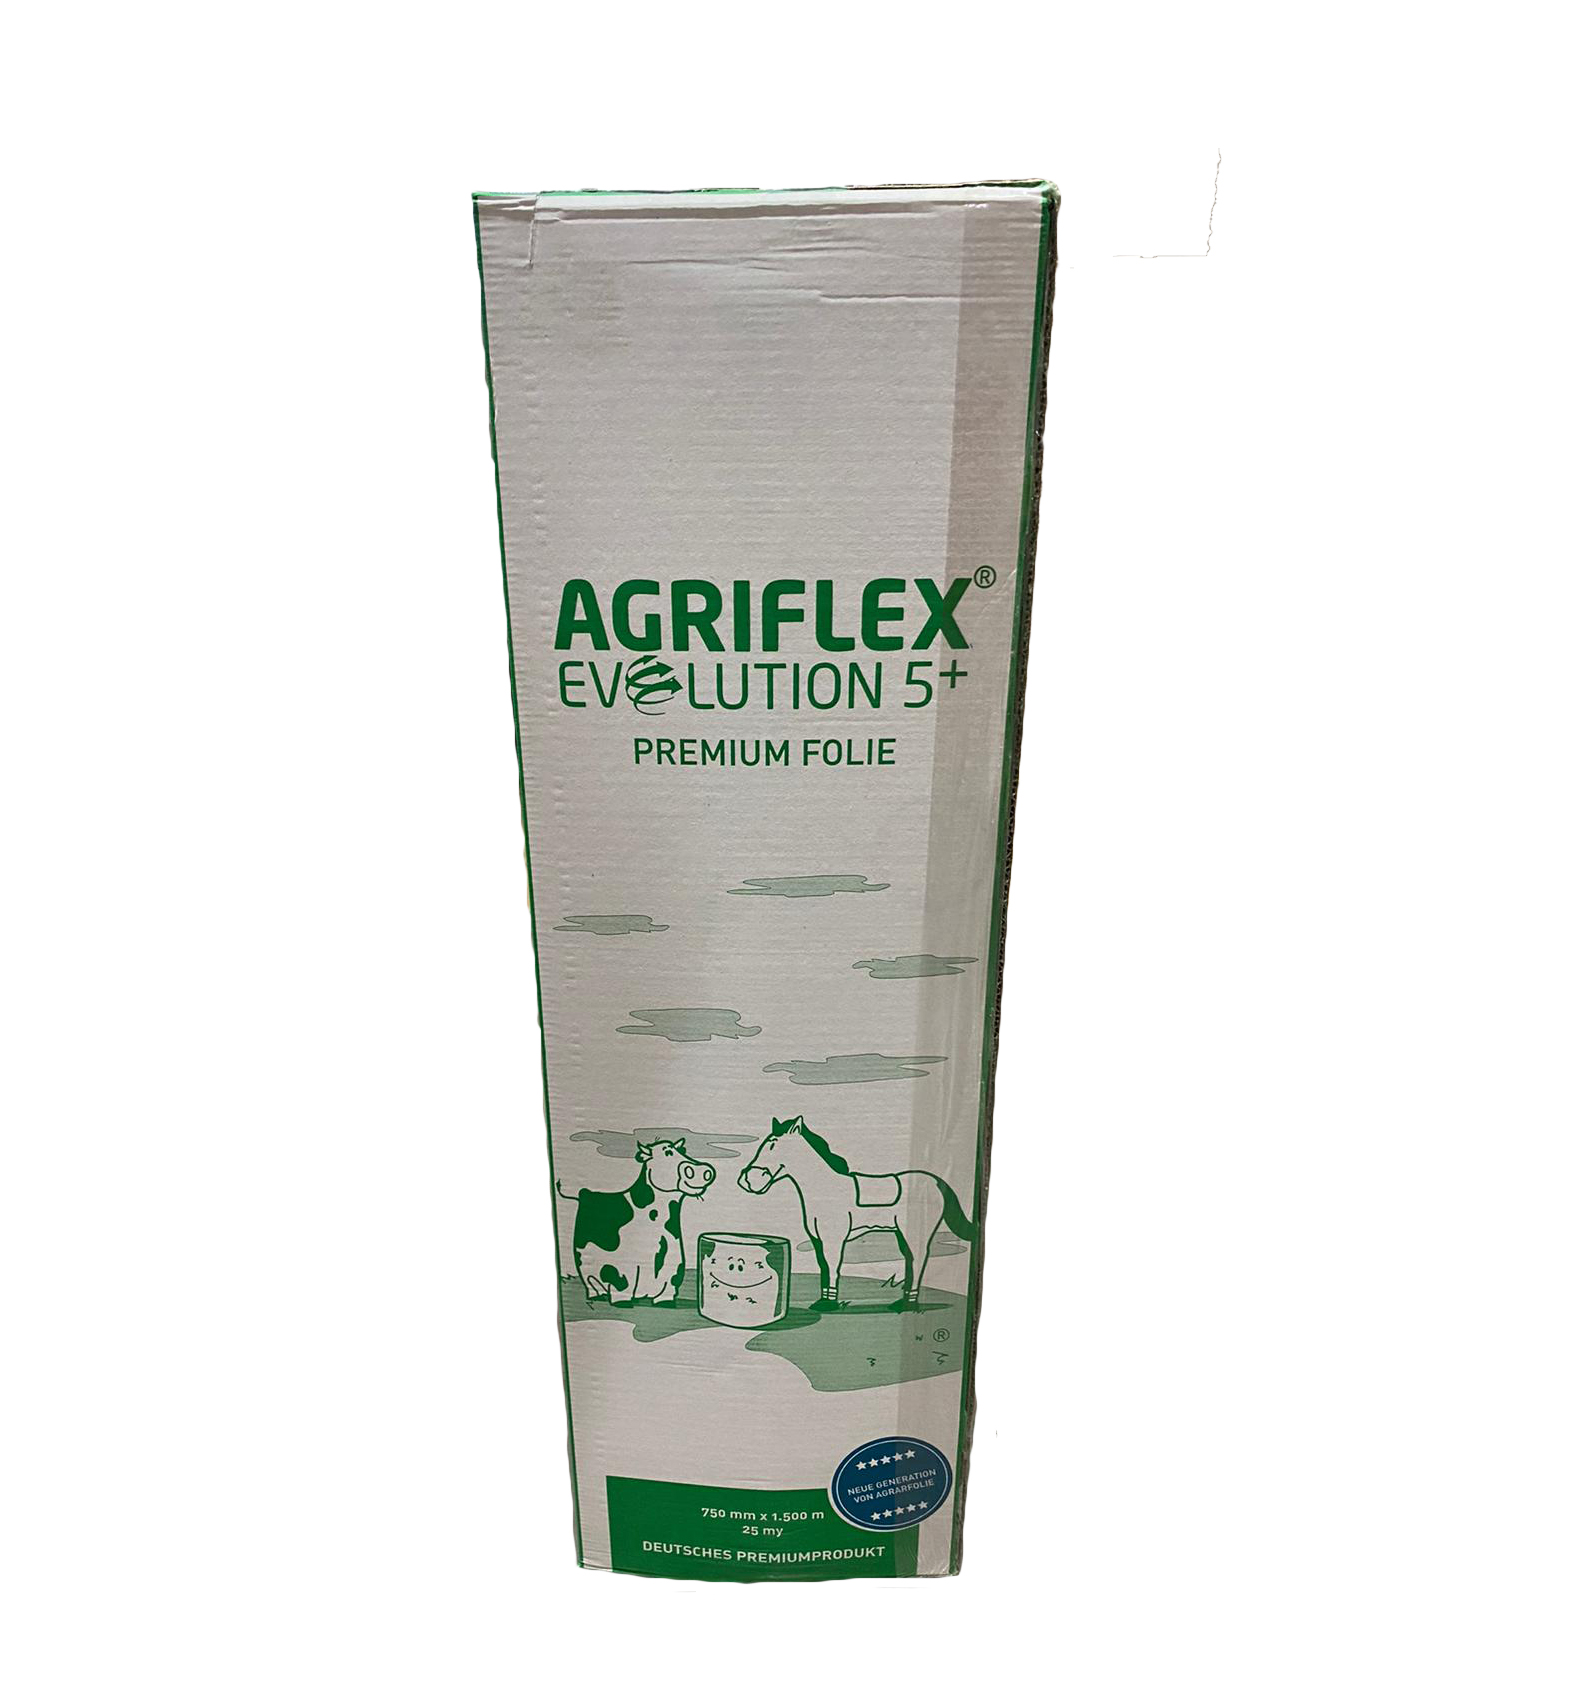 Agrarstretchfolie AgriFlex Evolution 5+, 750 mm x 1500 m, grün